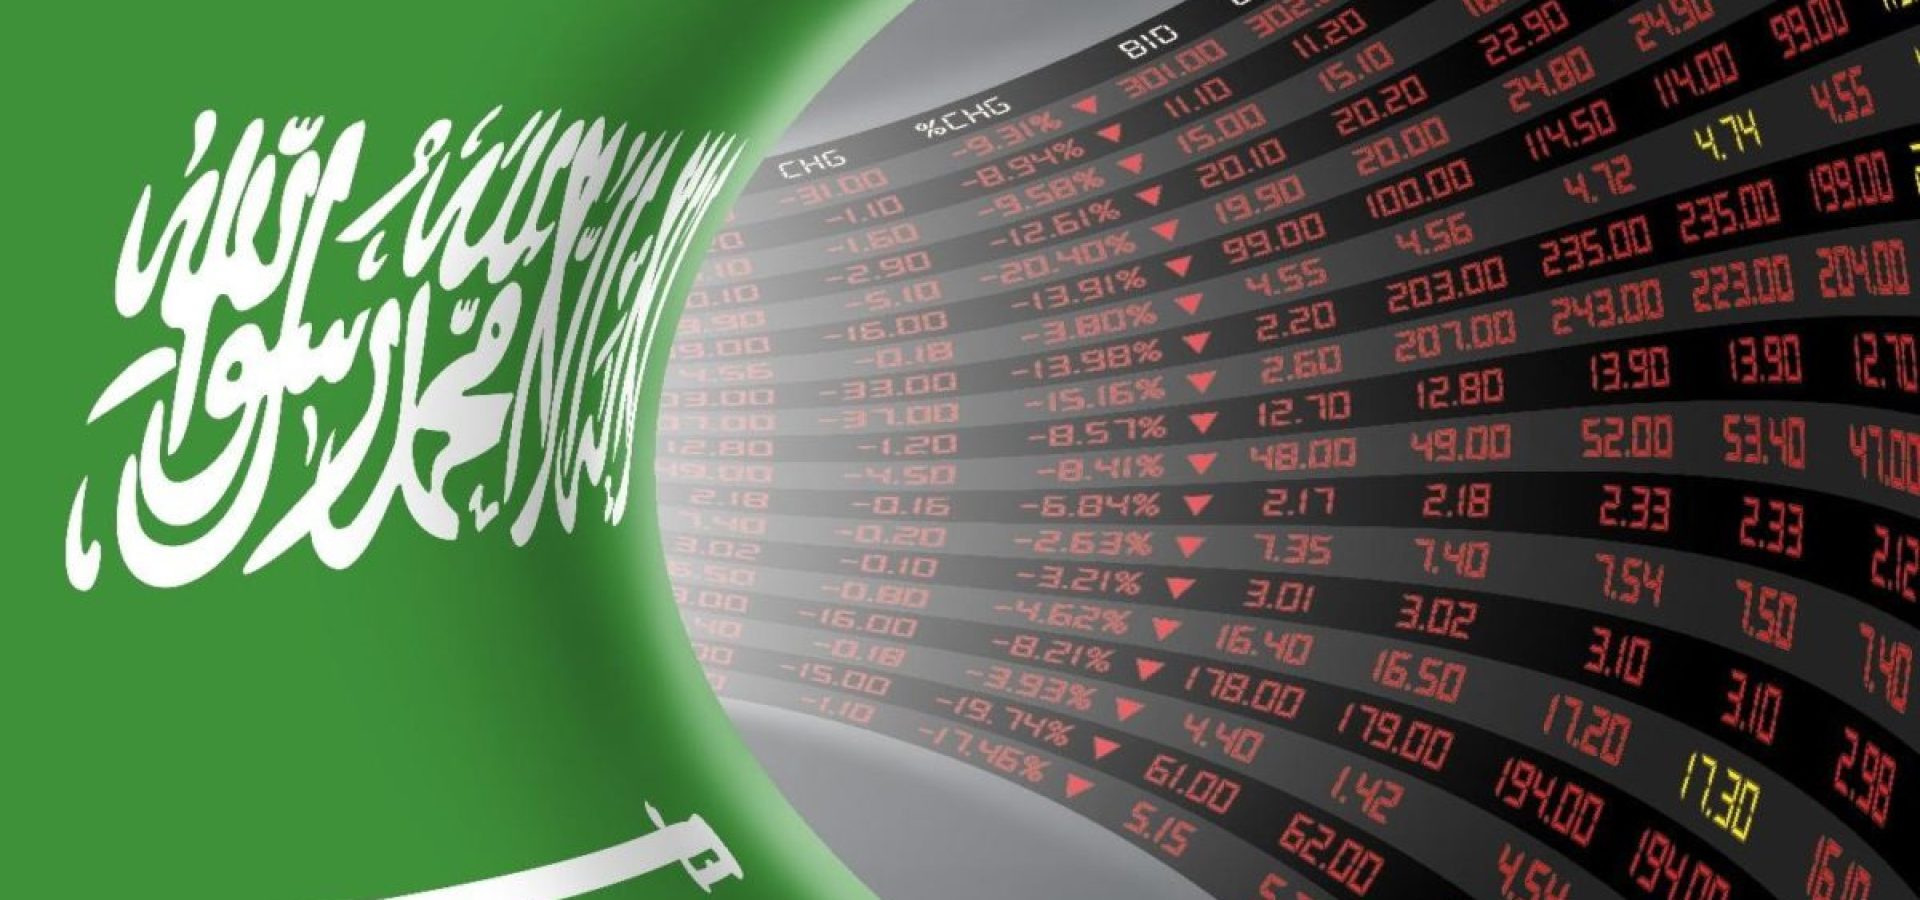 Saudi Arabia's economy recorded a 1.8% annual growth in Q2